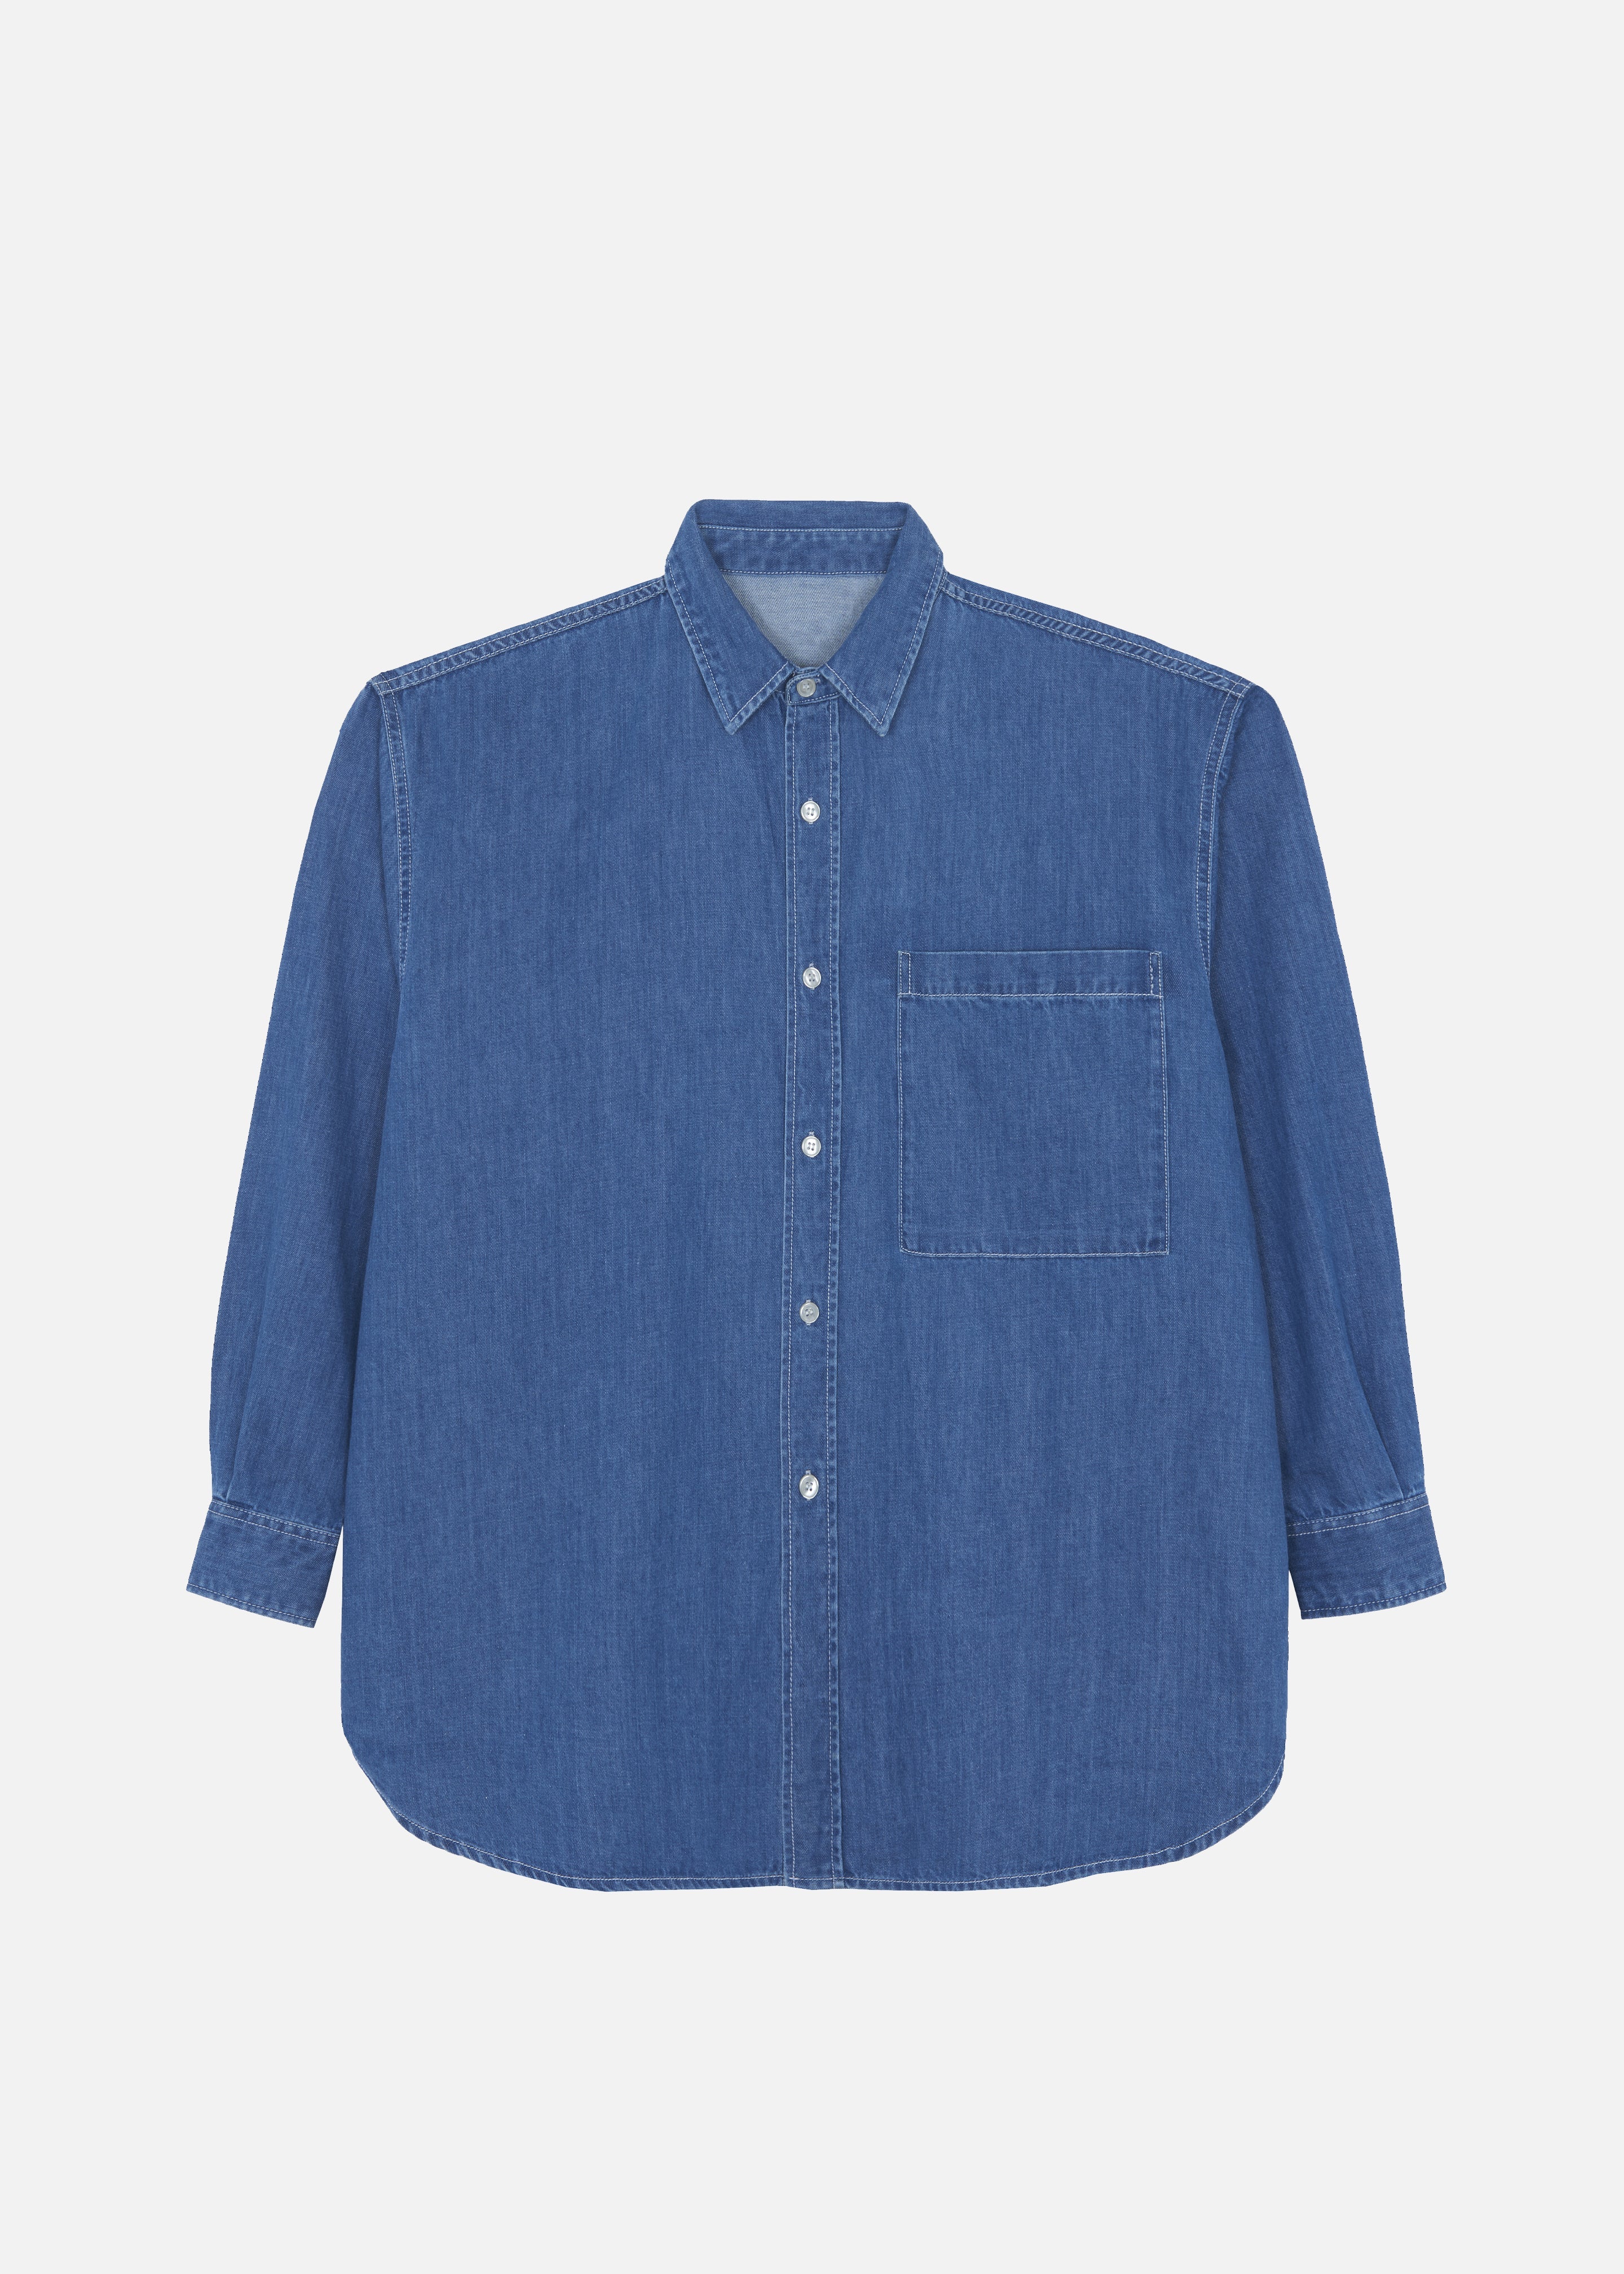 Tanner Denim Shirt - Medium Wash - 8